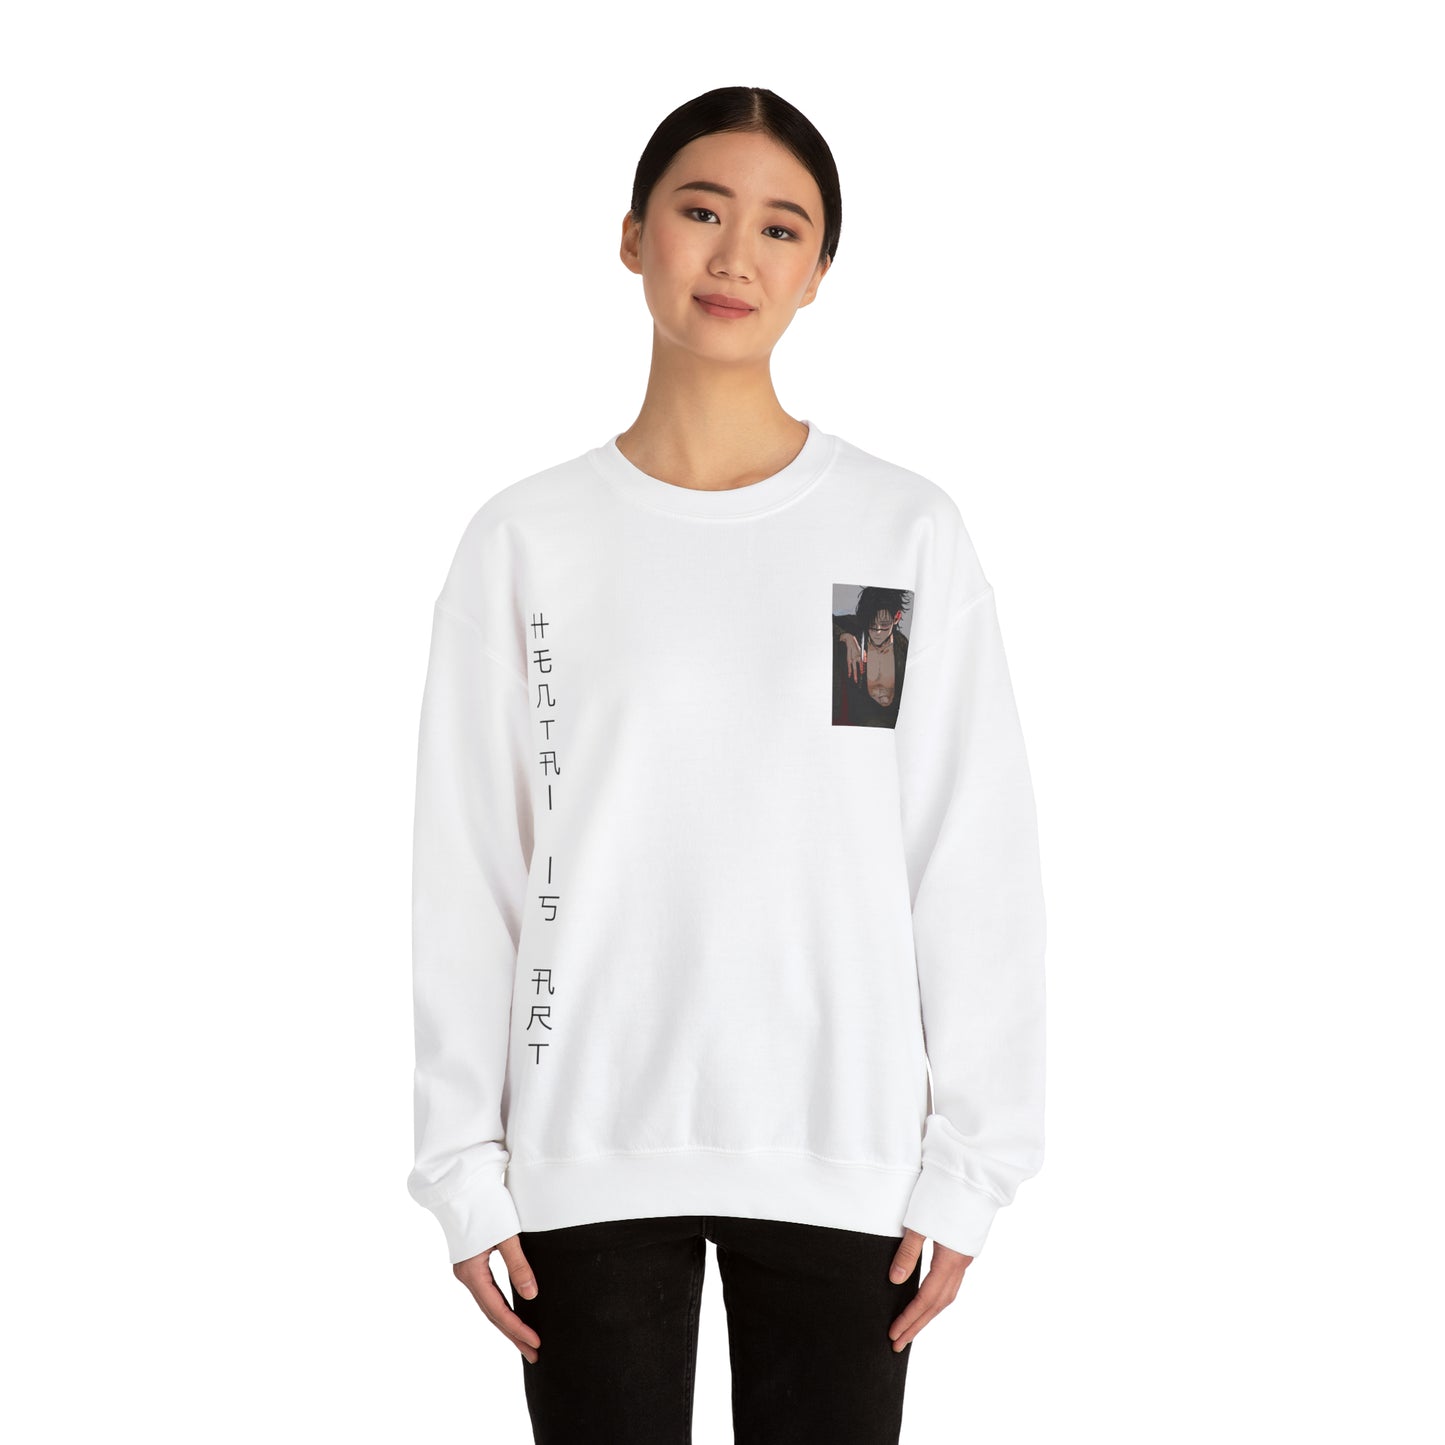 Hentai is Art [Design #2] - Sweatshirt